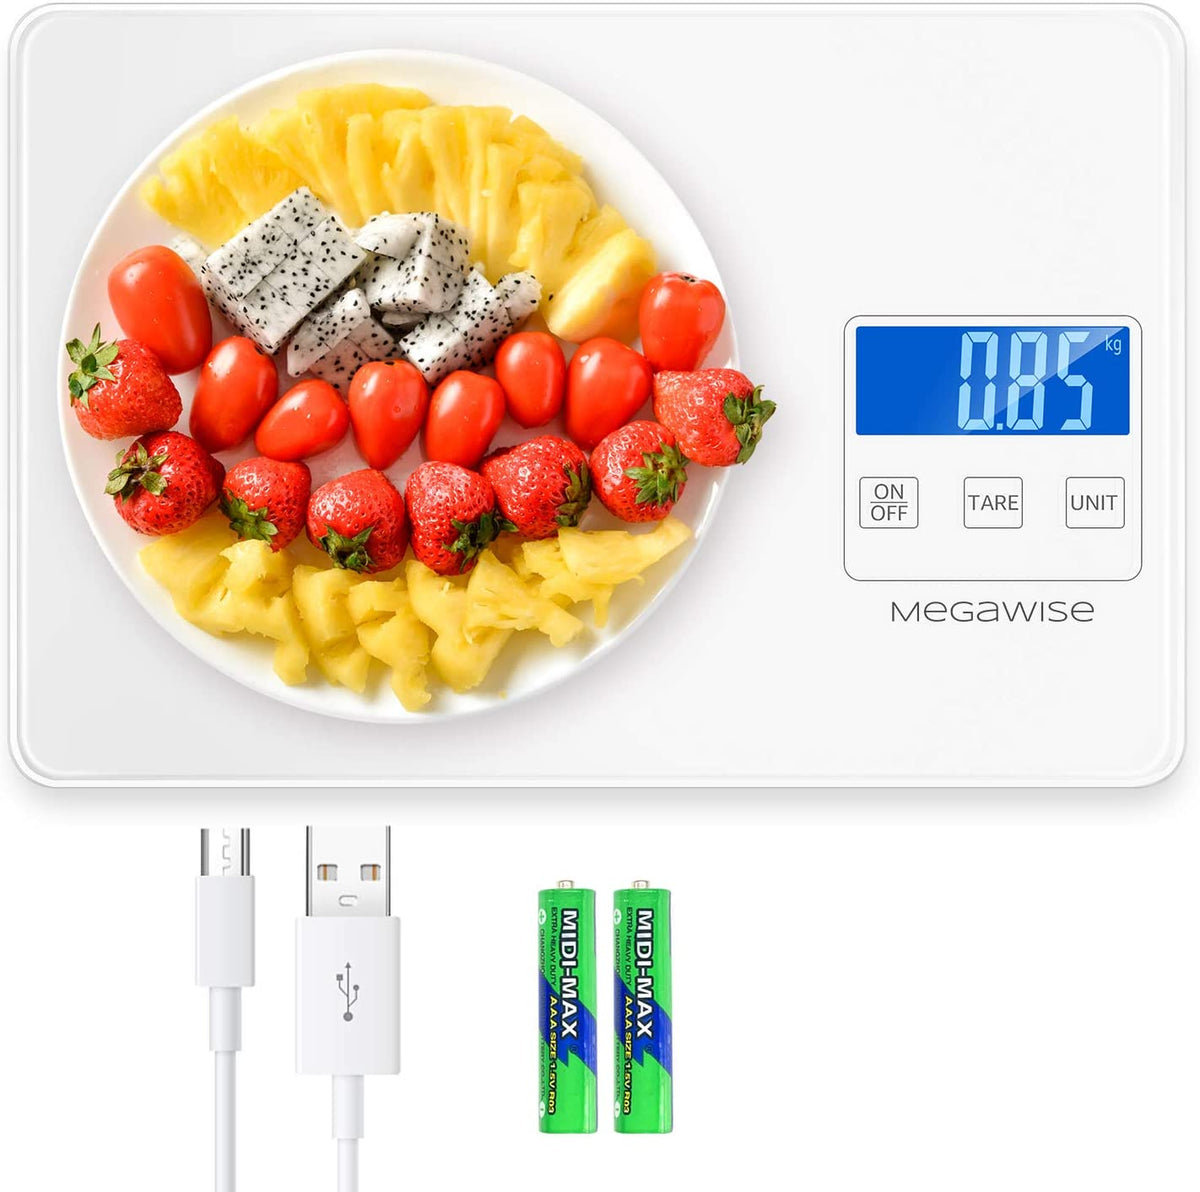 LED Portable Digital Kitchen Food Scale  Food scale, Digital kitchen scales,  Food